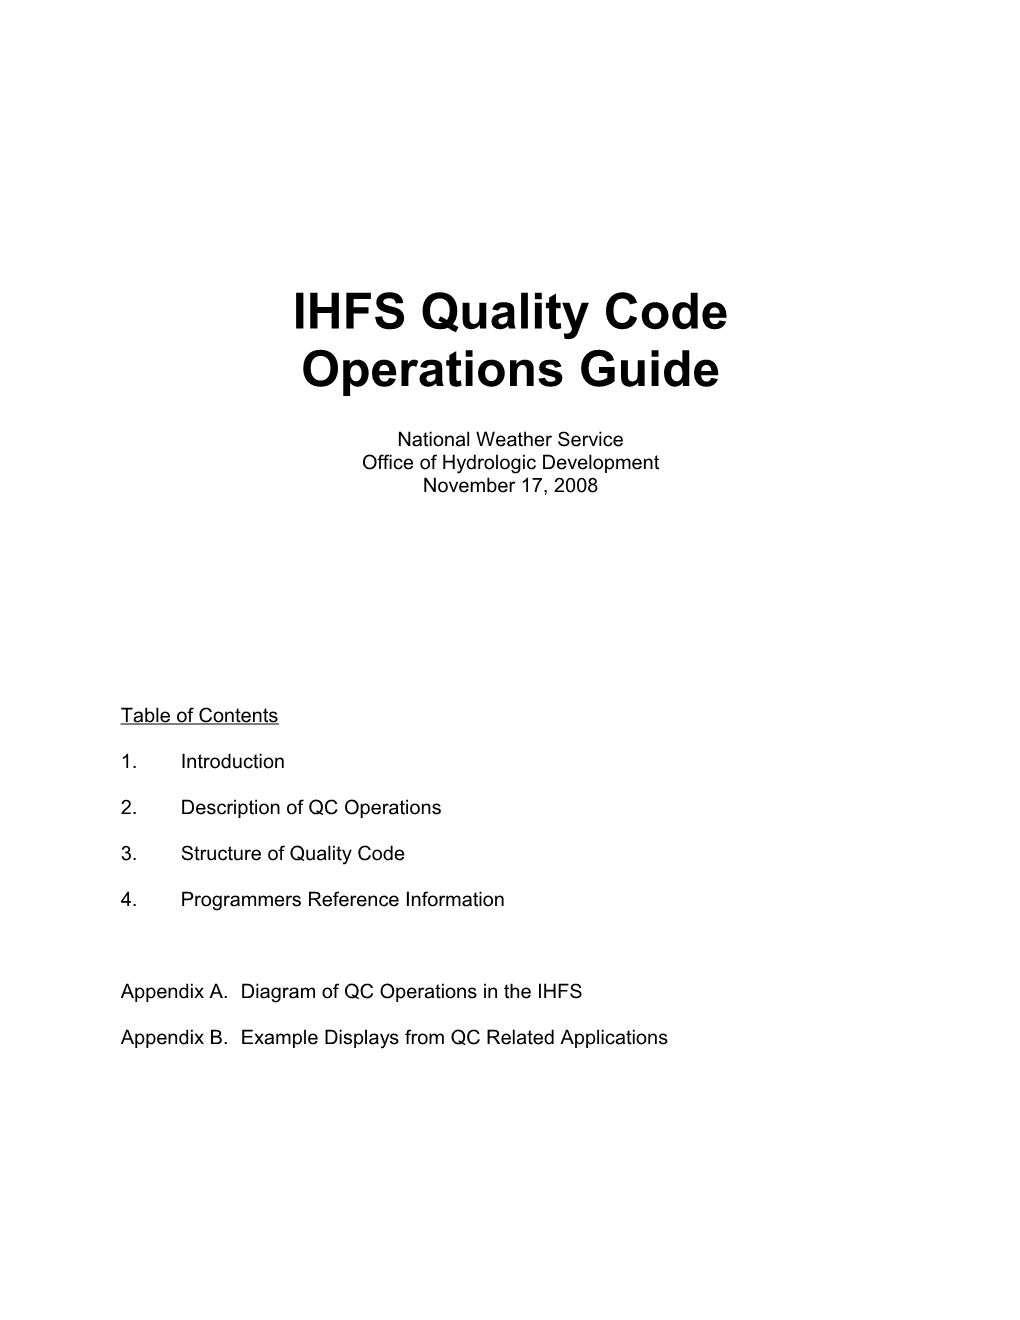 IHFS Quality Code